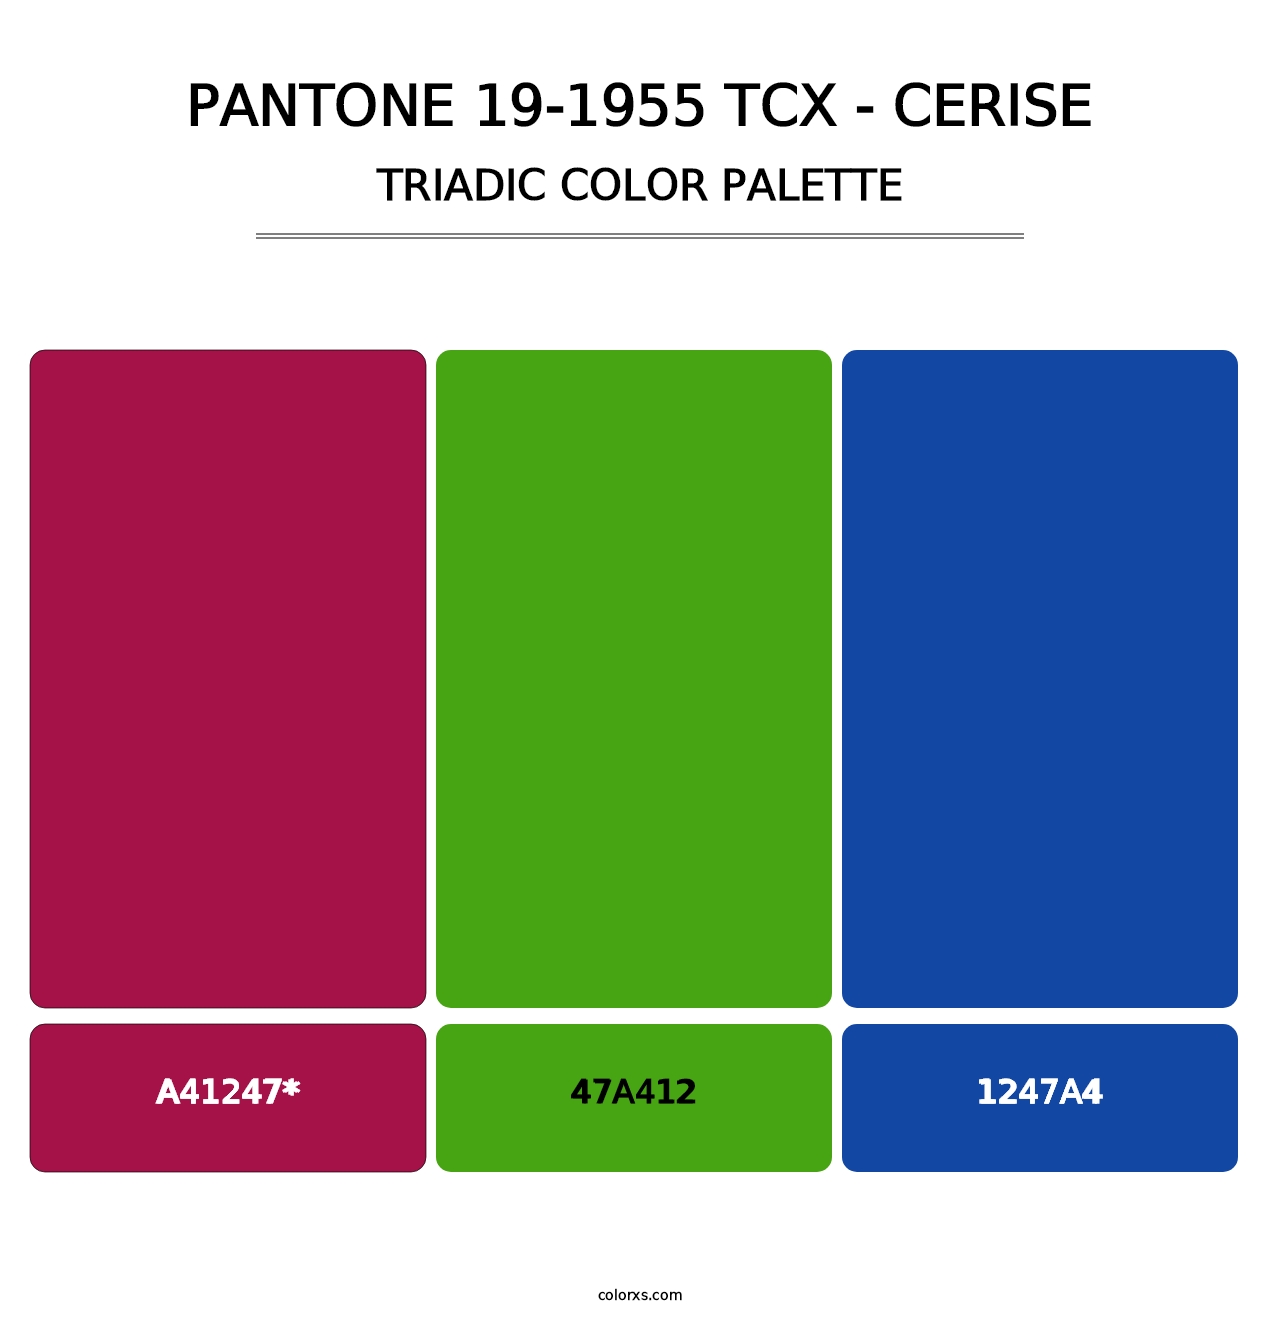 PANTONE 19-1955 TCX - Cerise - Triadic Color Palette